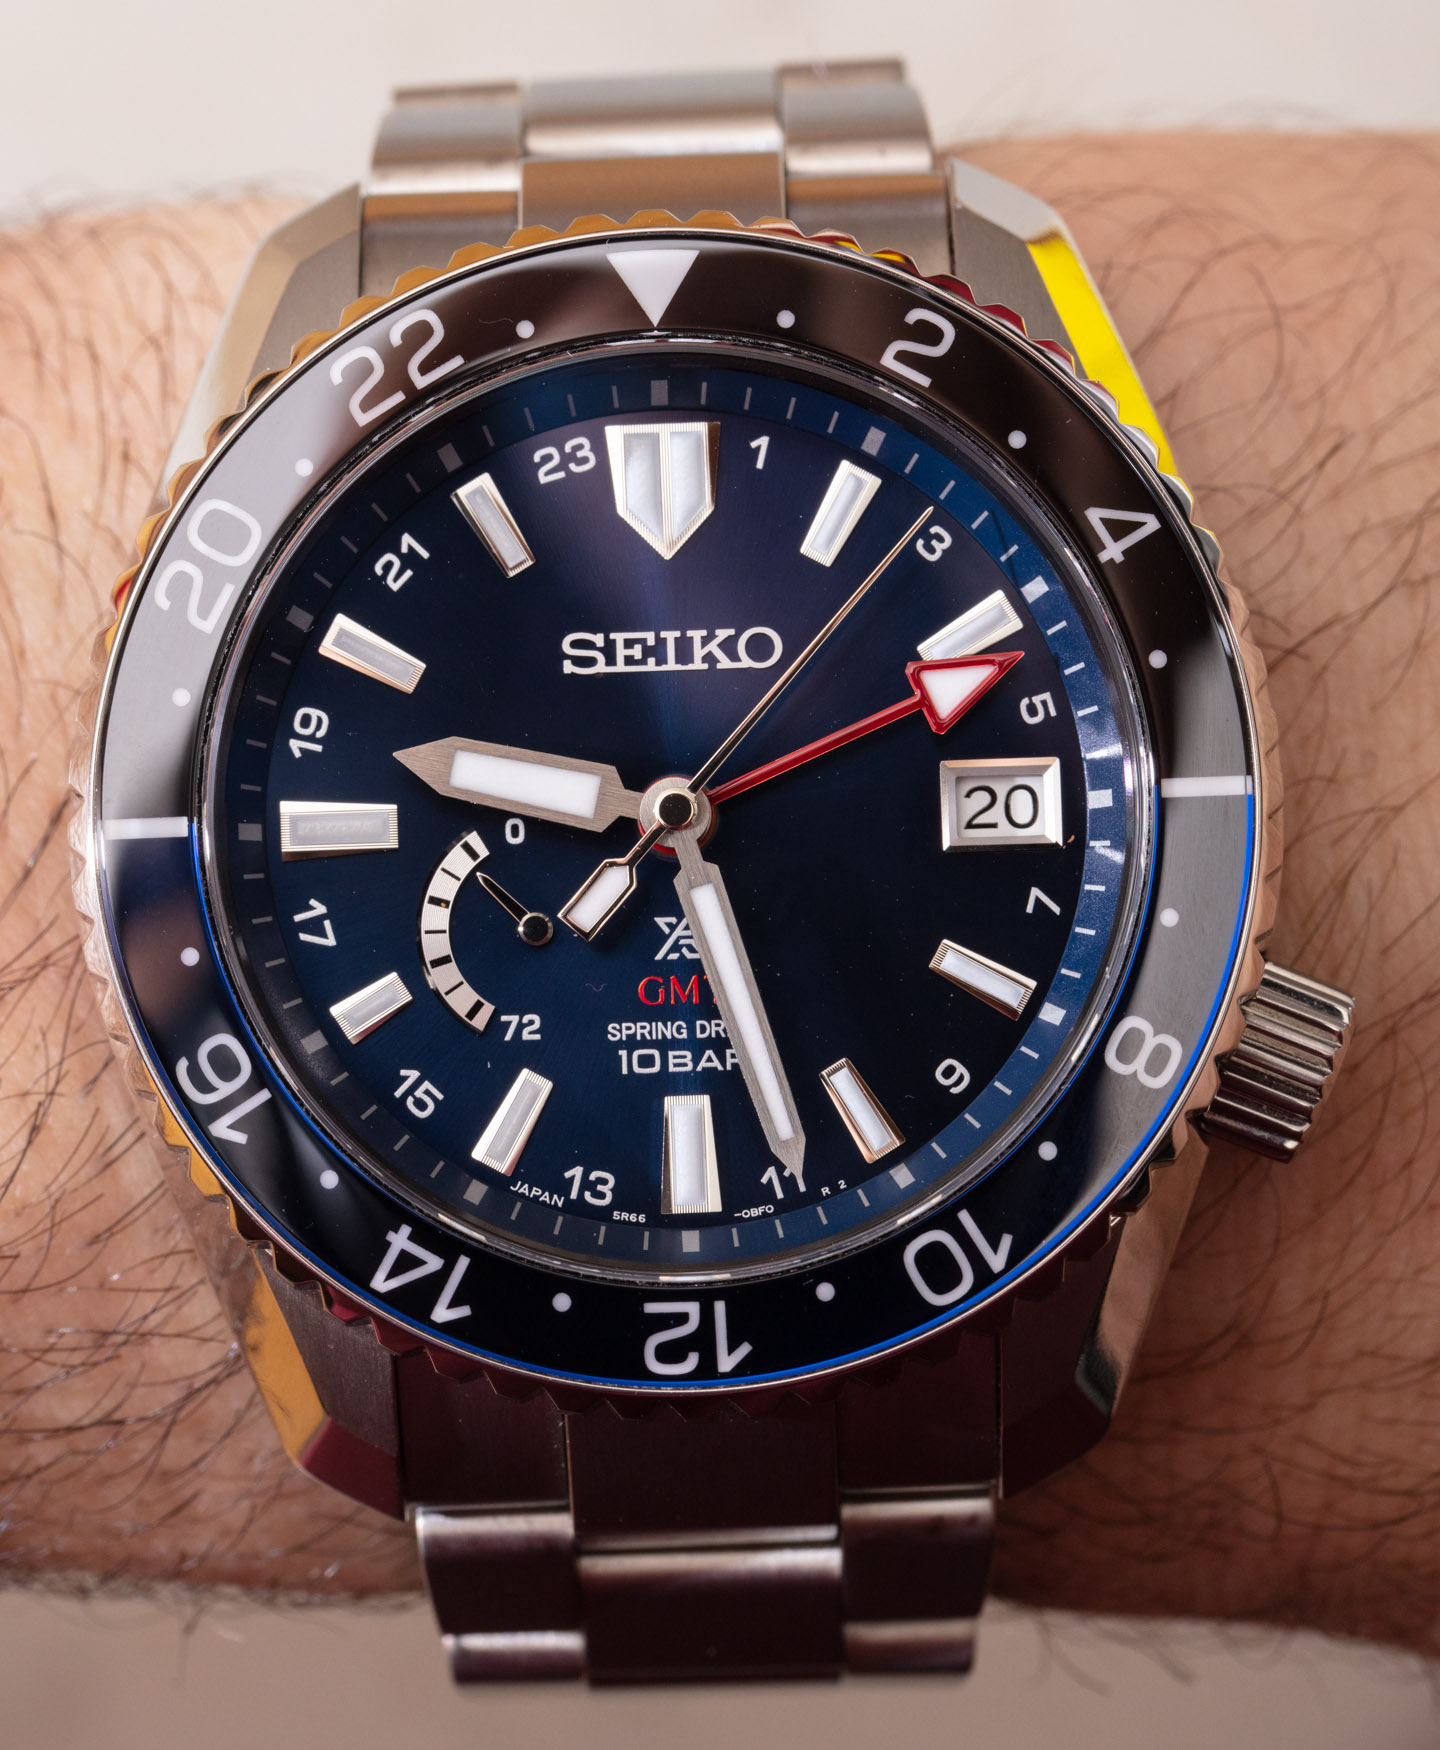 Watch Review: Seiko Prospex SNR033 Spring Drive GMT | aBlogtoWatch